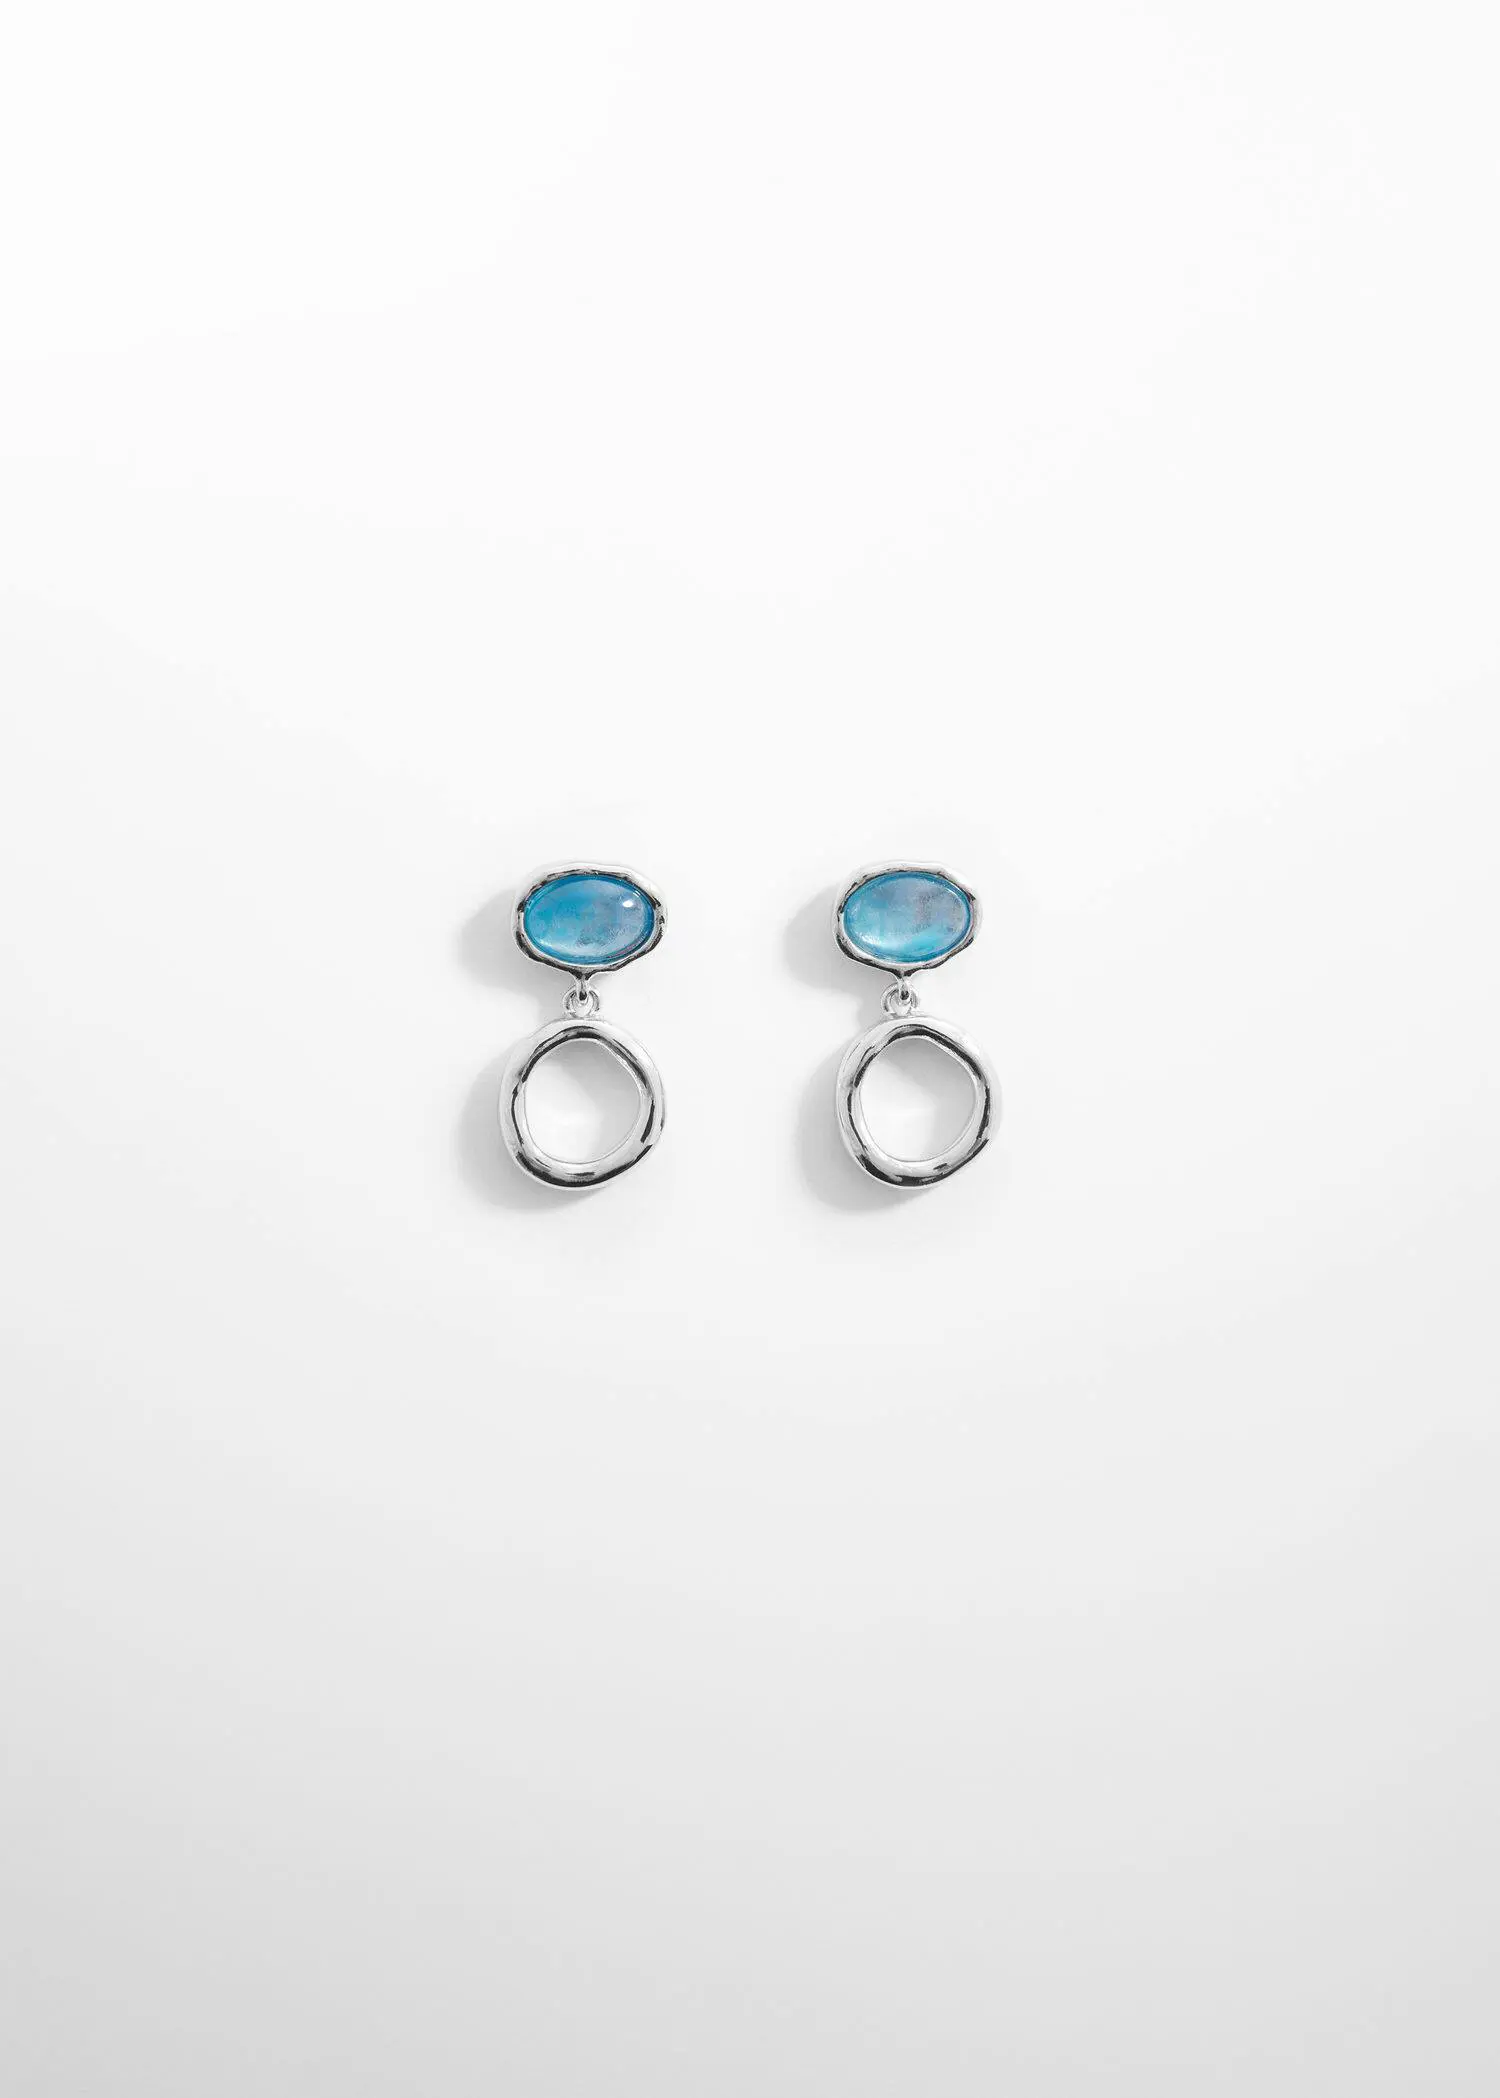 Mango Bead loop earrings. a pair of blue earrings on a white surface. 